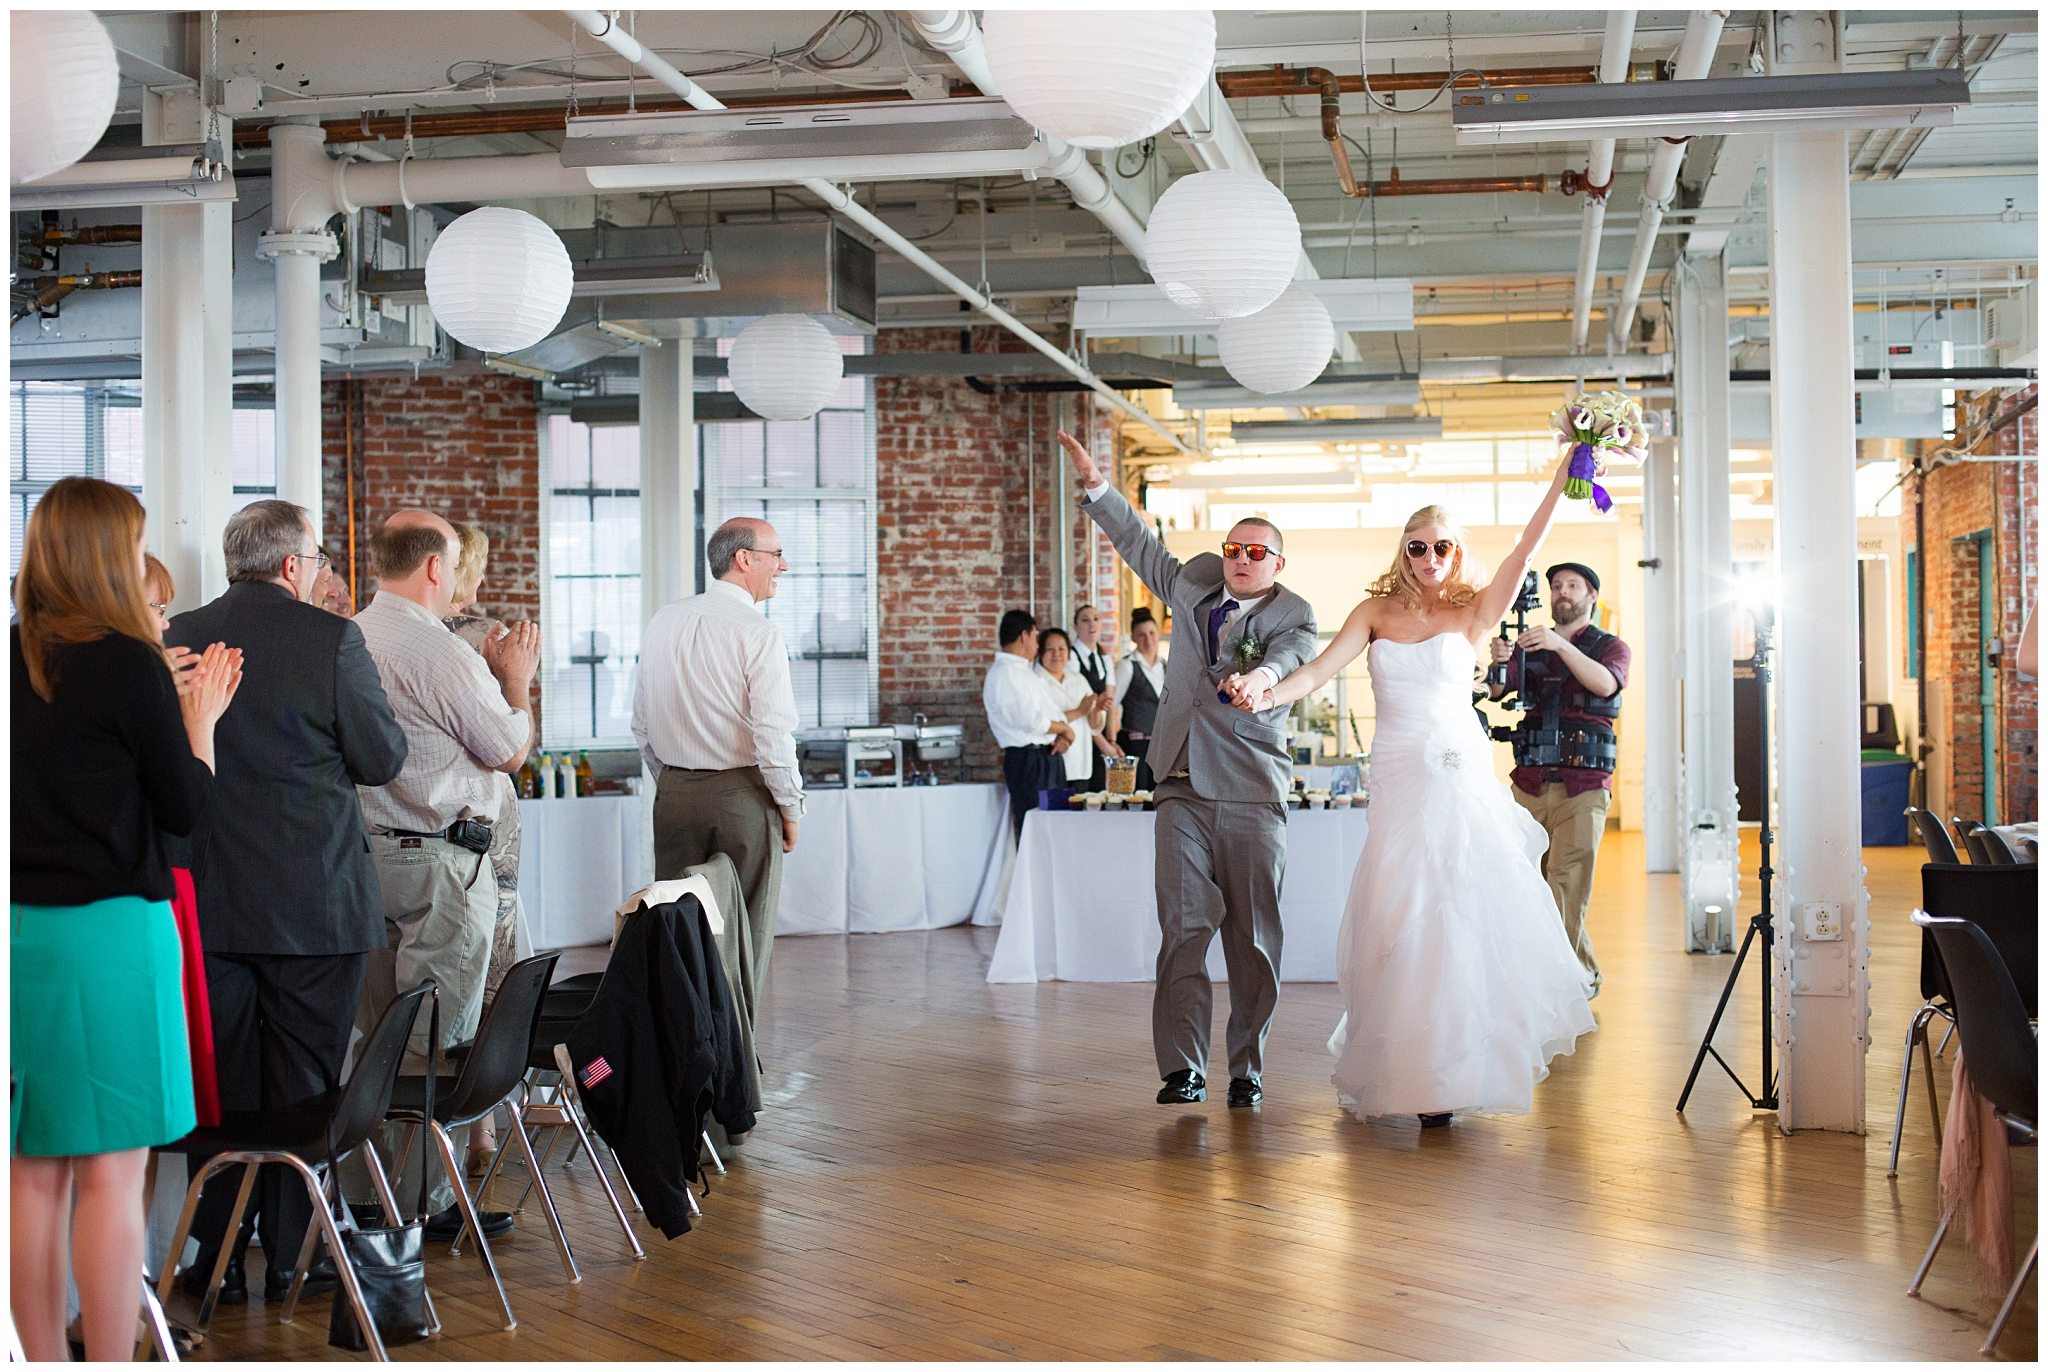 Berks County Wedding Venues GoogleWorks Art Studio Factory